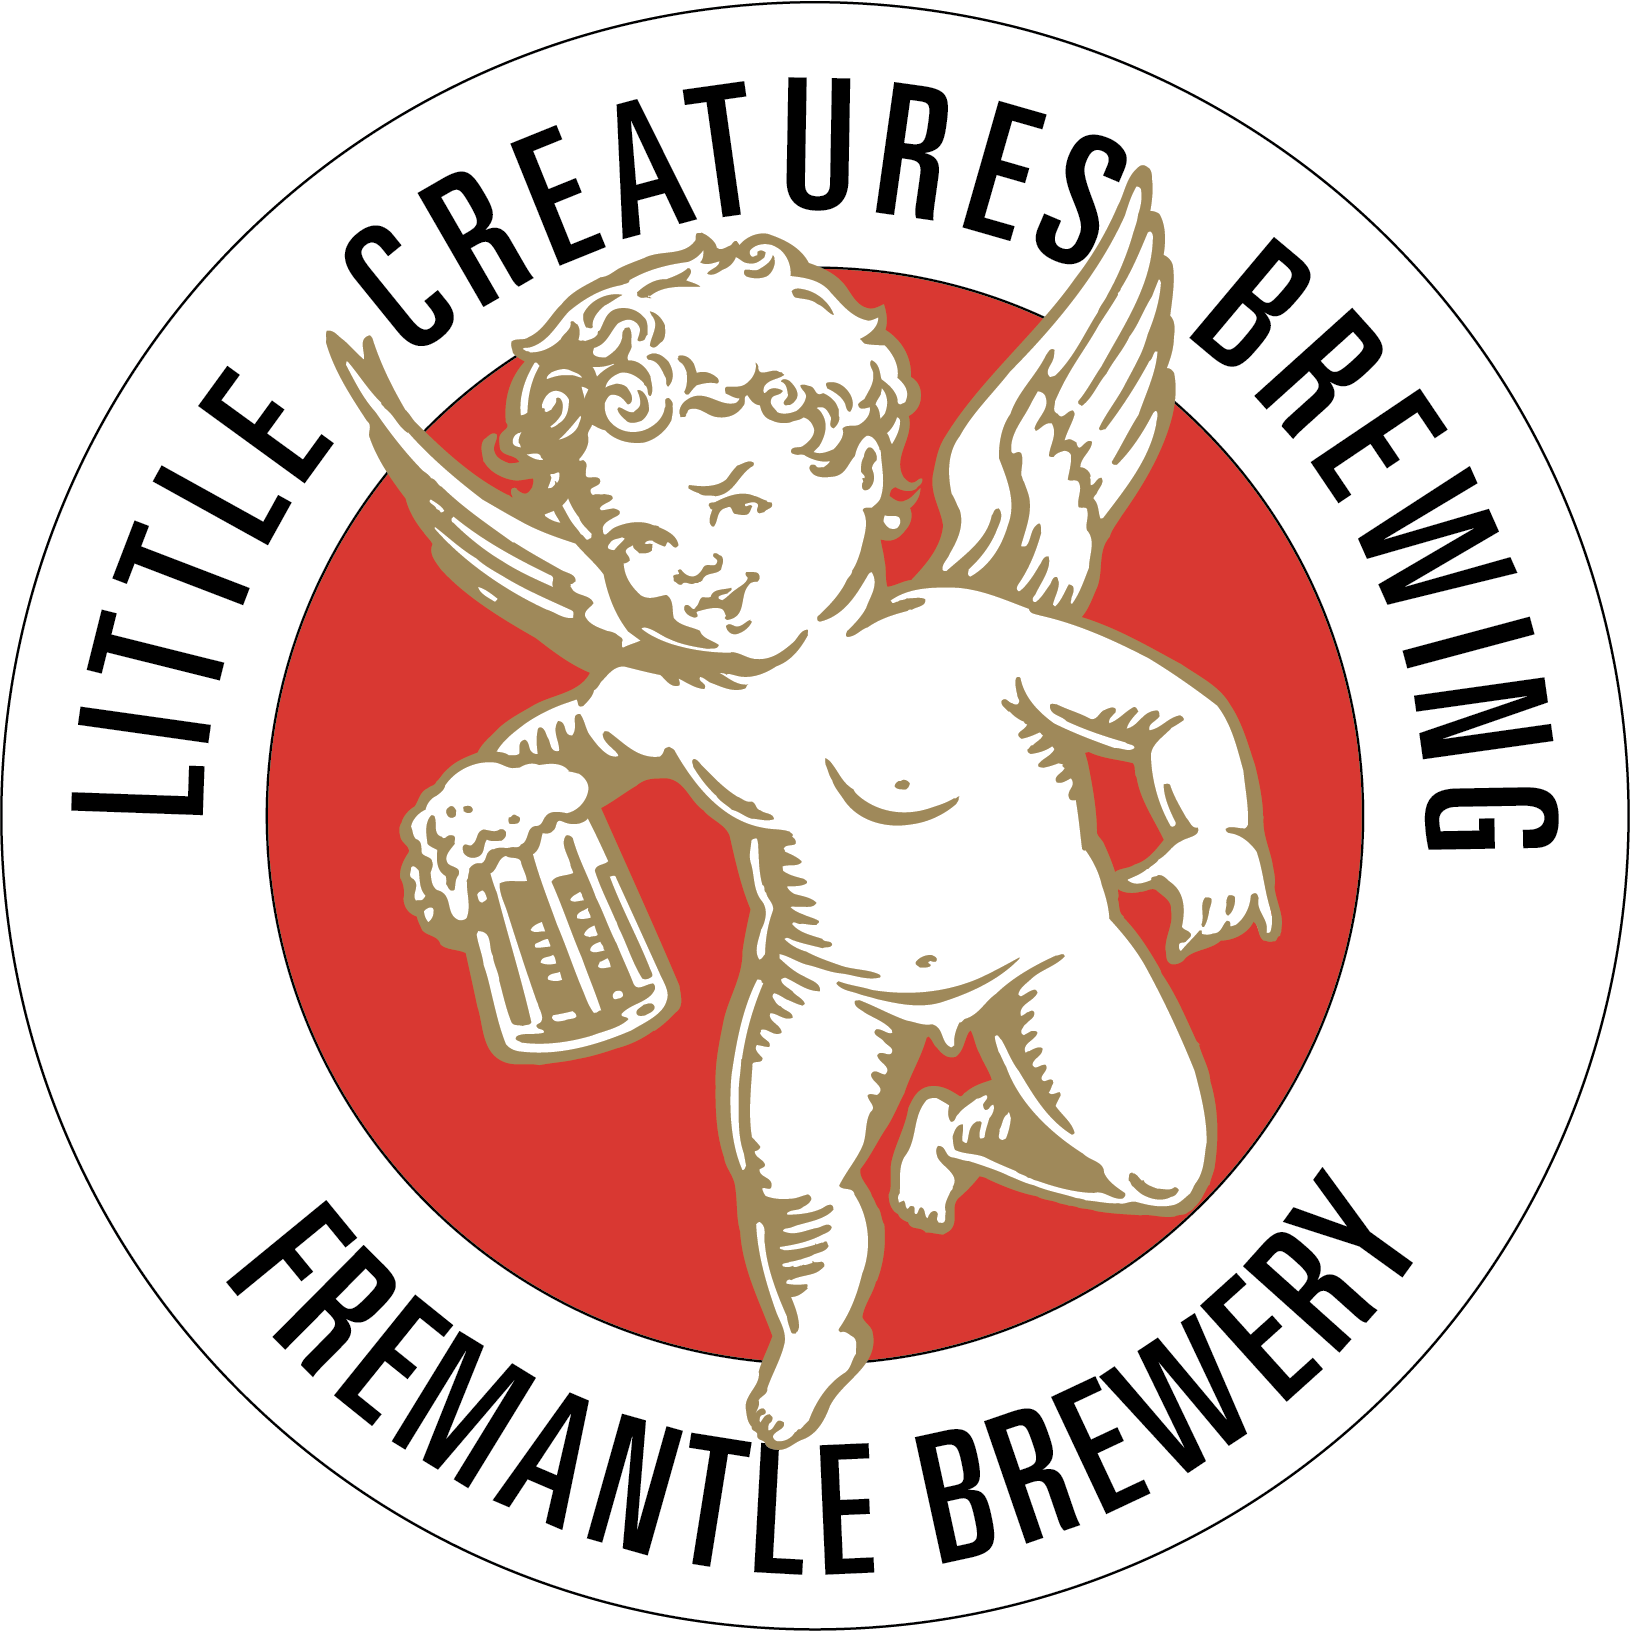 Little Creatures Fremantle Brewery